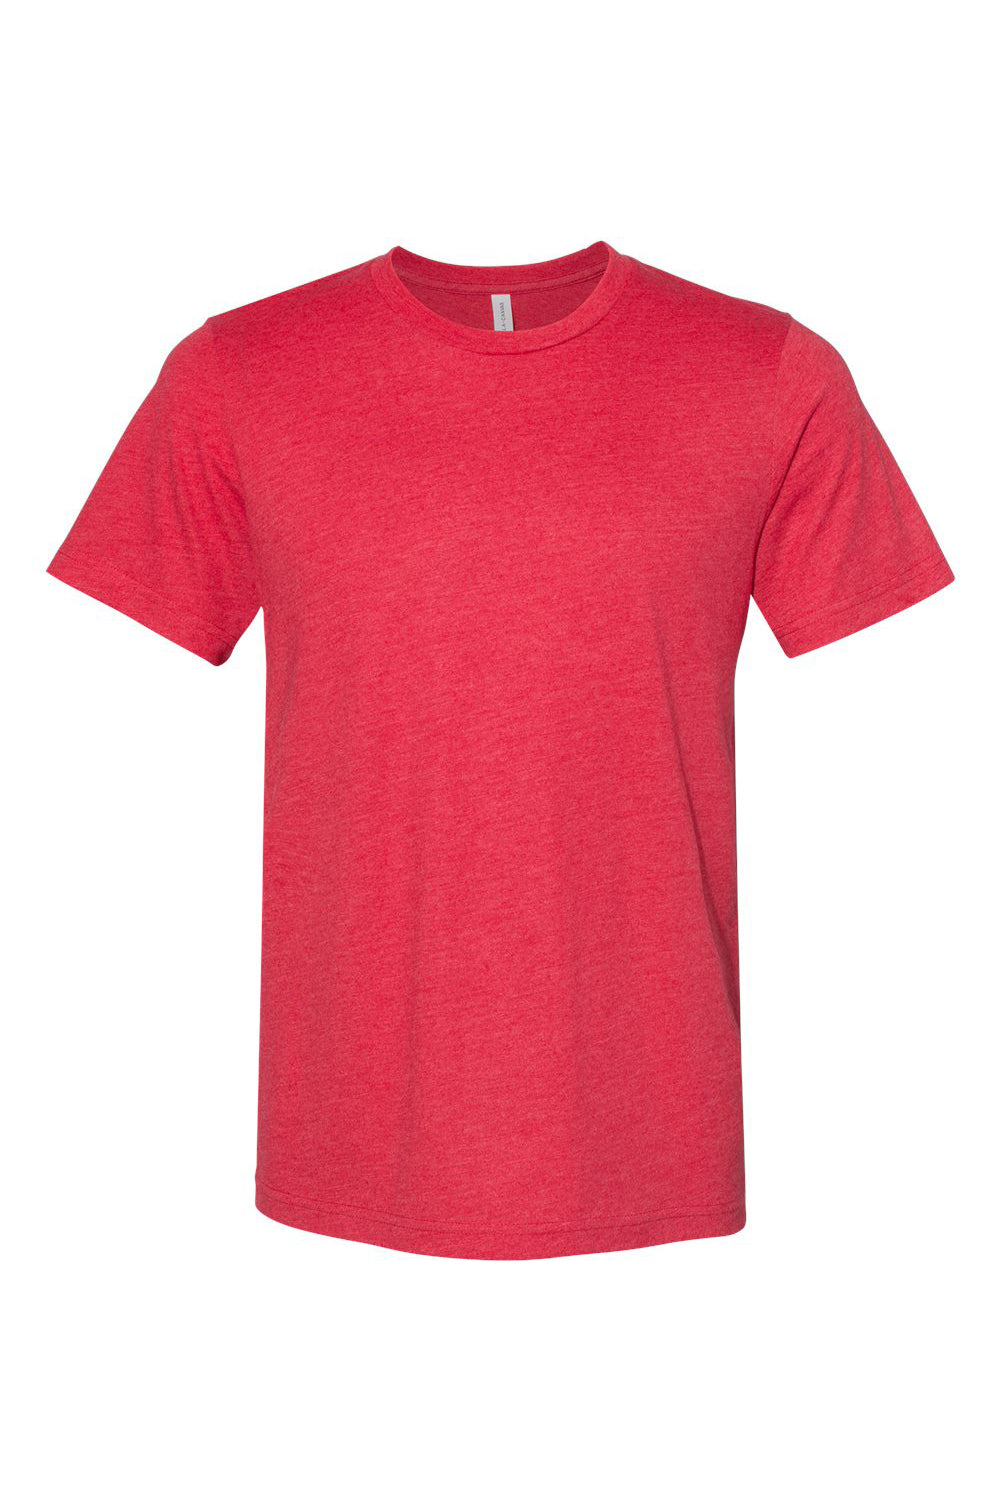 Bella + Canvas BC3301/3301C/3301 Mens Jersey Short Sleeve Crewneck T-Shirt Heather Red Flat Front